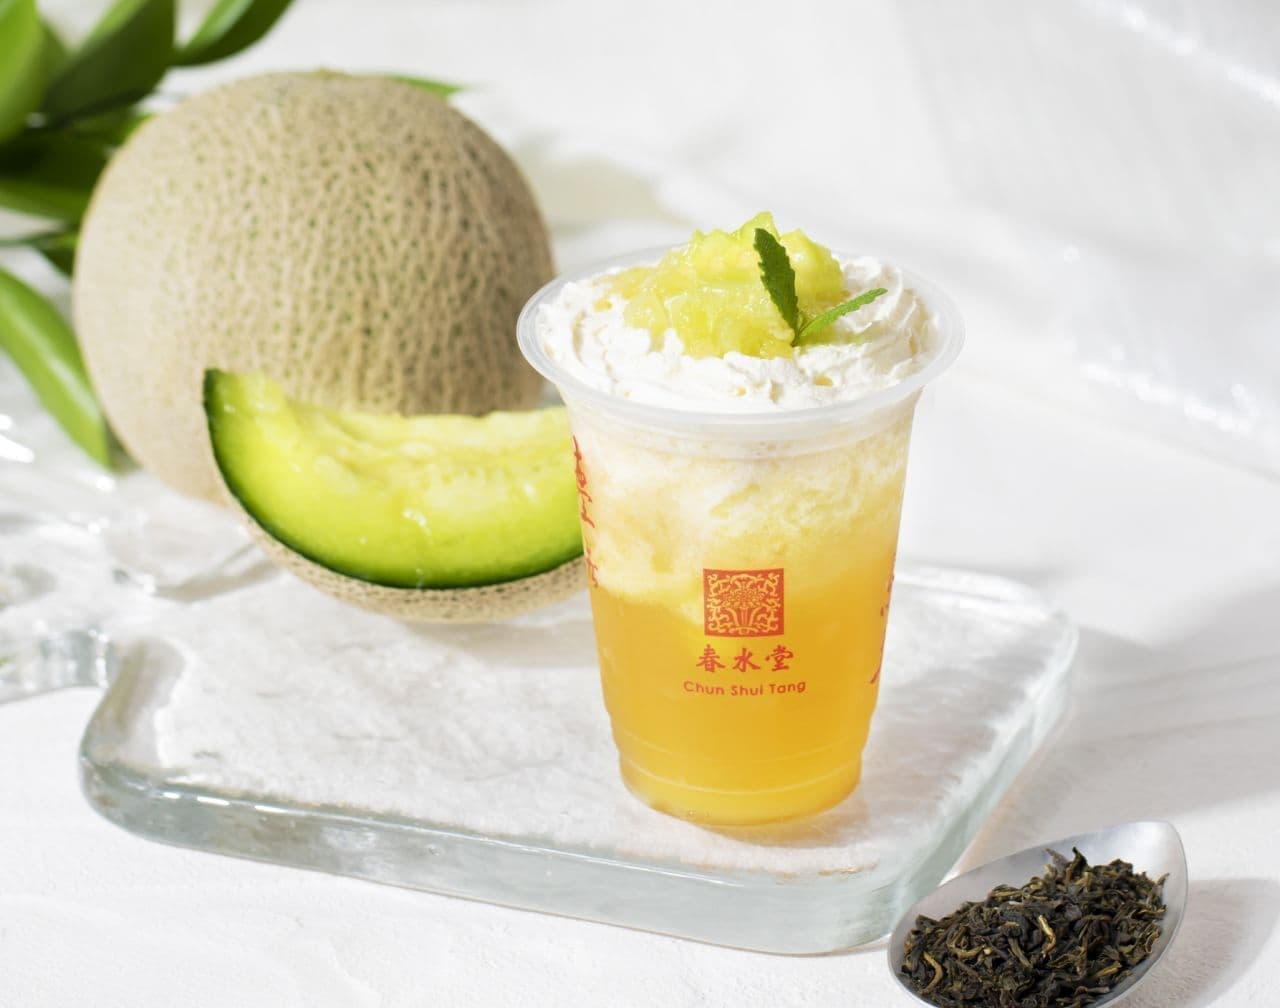 Chun Shui Tang "Fruit Tea Melon